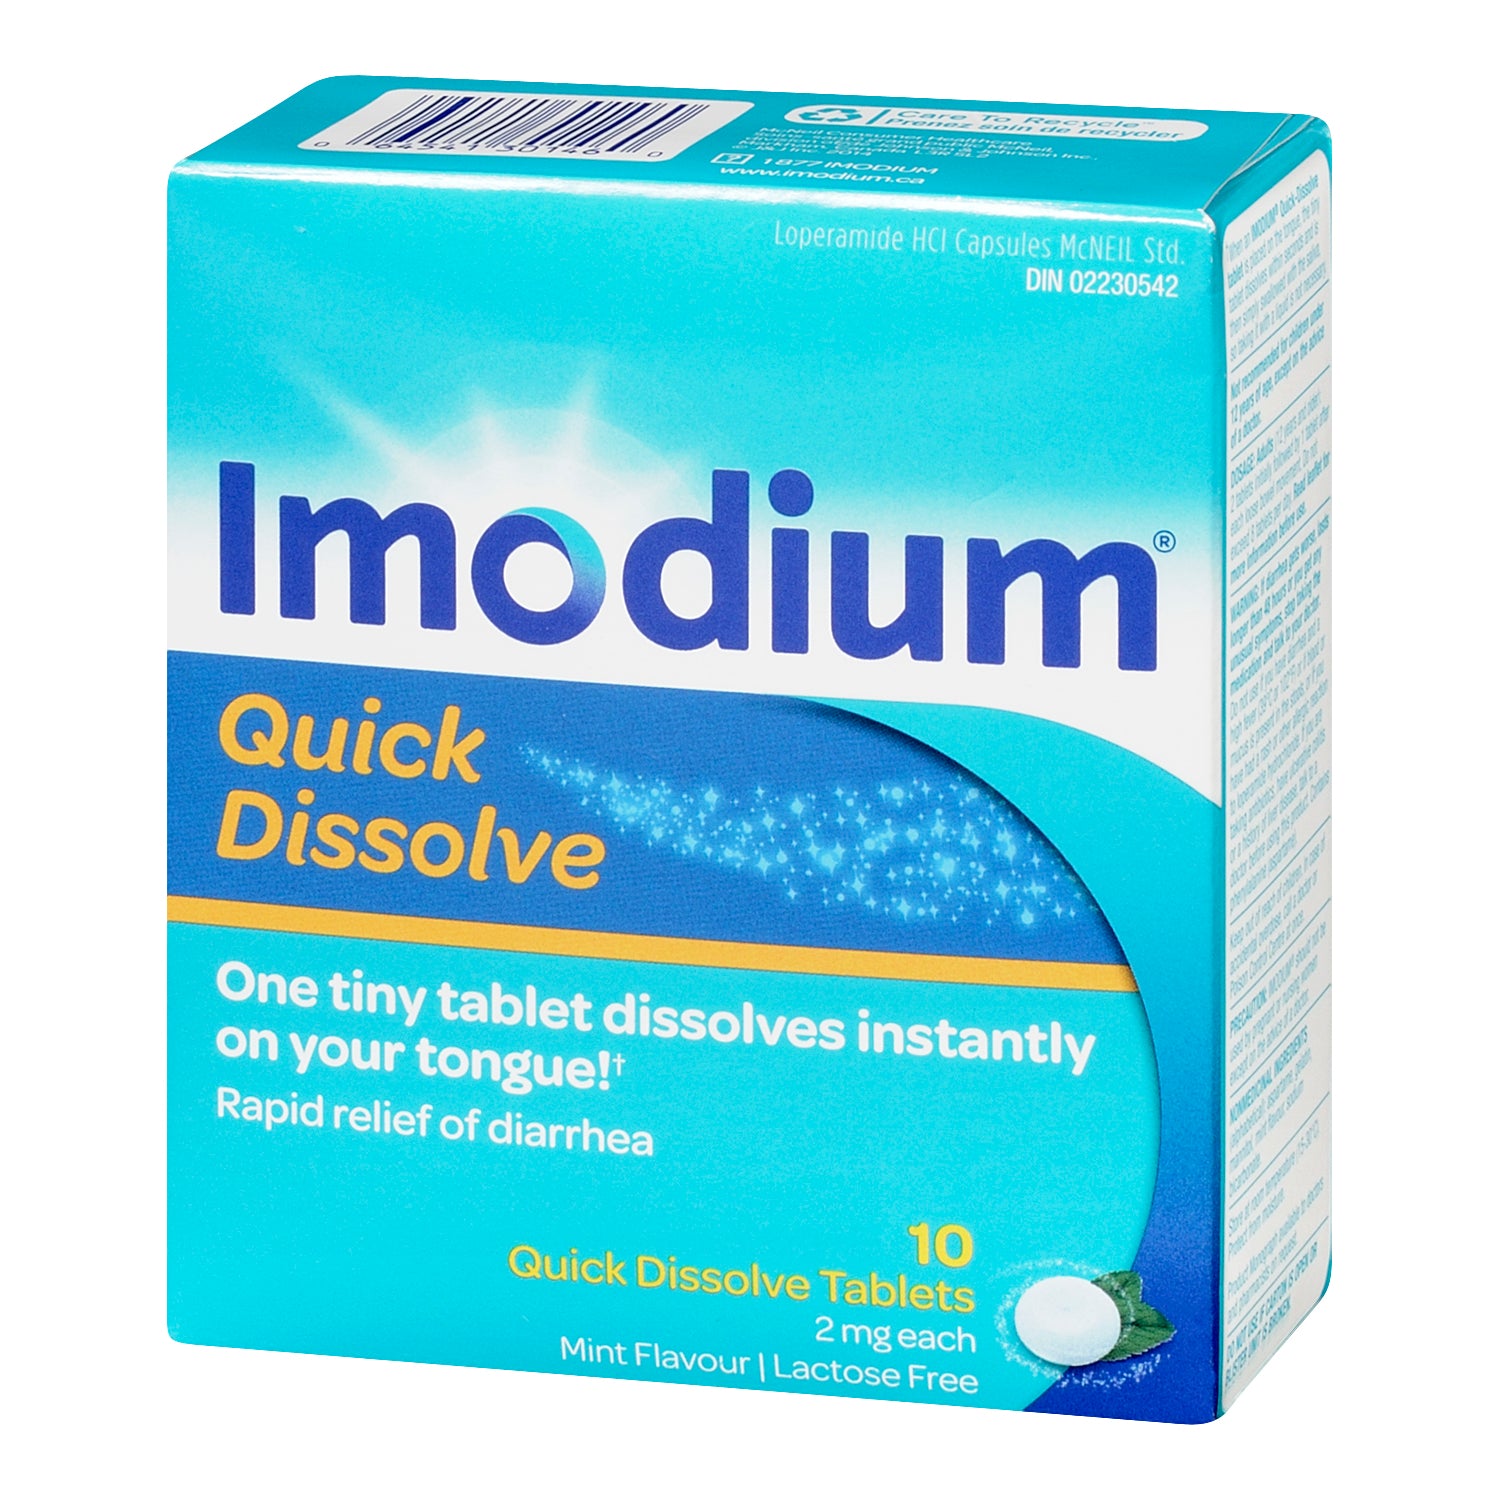 Imodium Quick Dissolve Tablets 2mg